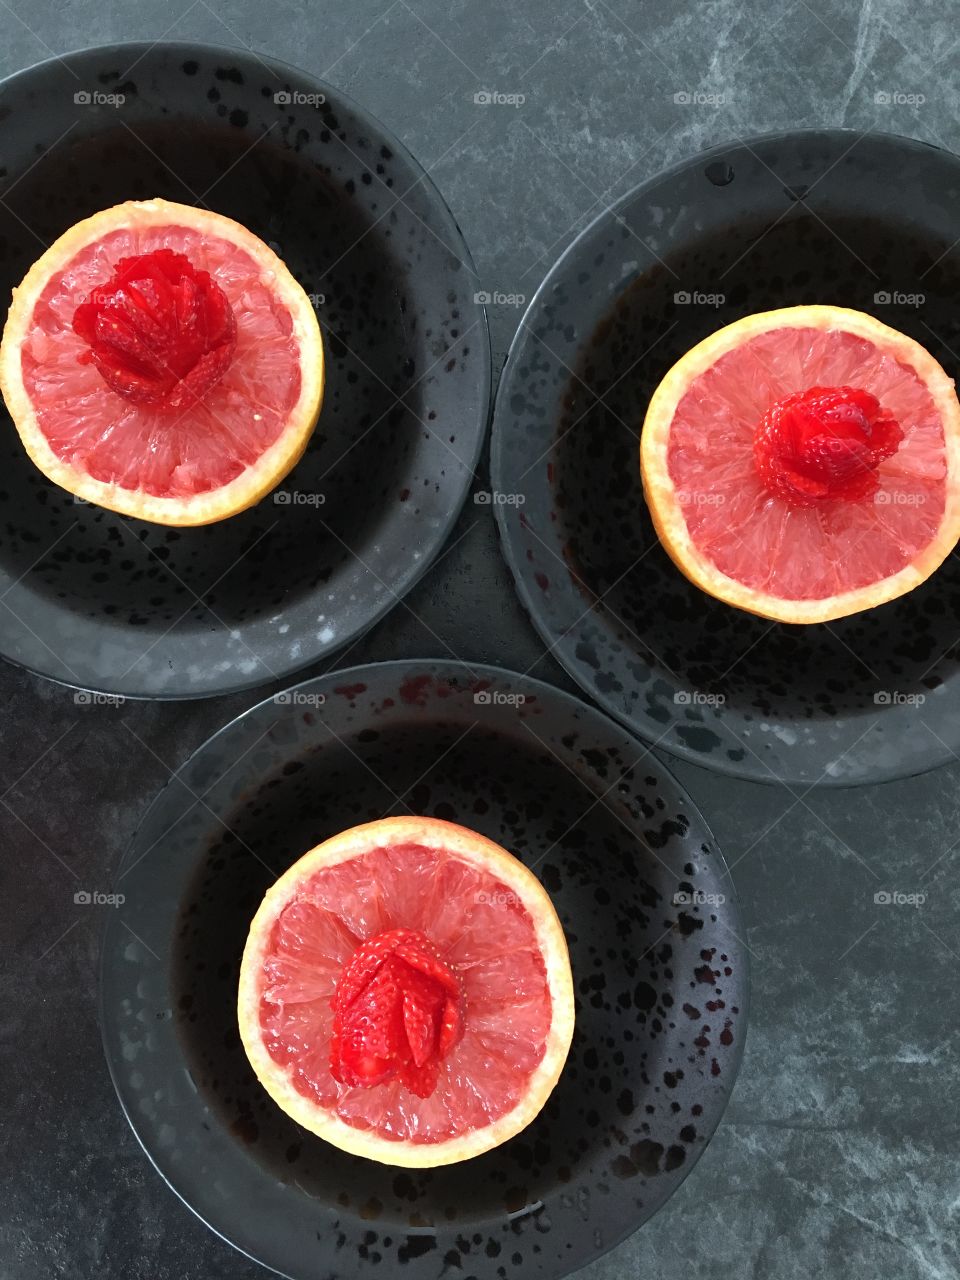 Grapefruit and Strawberries 